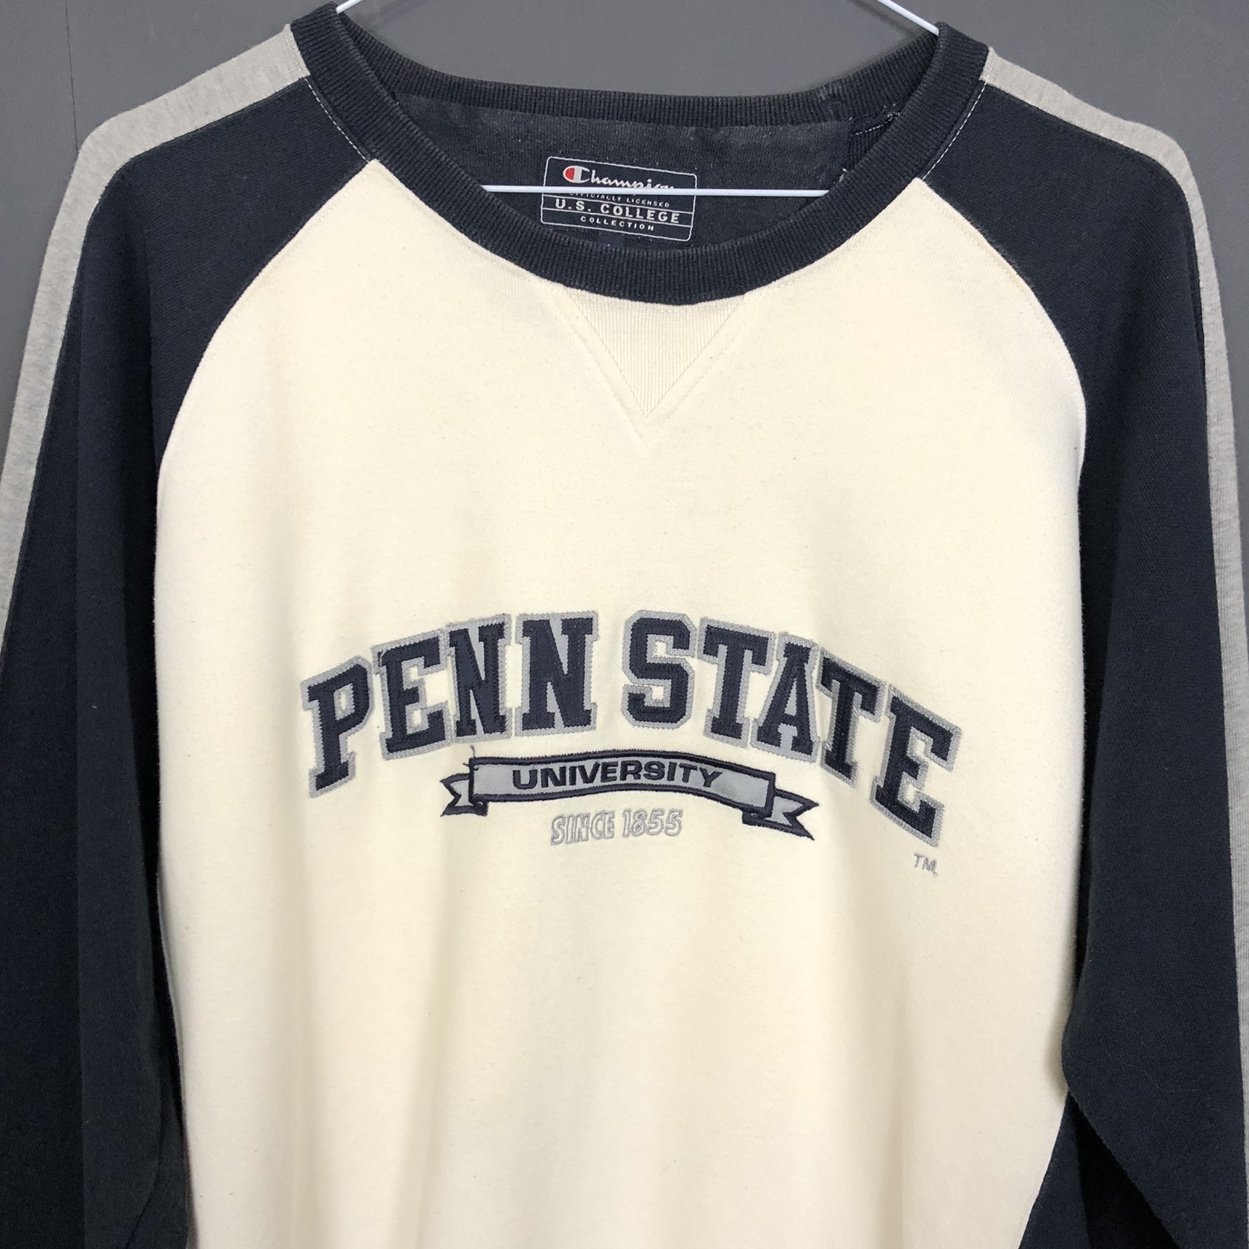 Vintage Champion Penn State Sweatshirt in Beige, Navy & Grey - Vintique Clothing